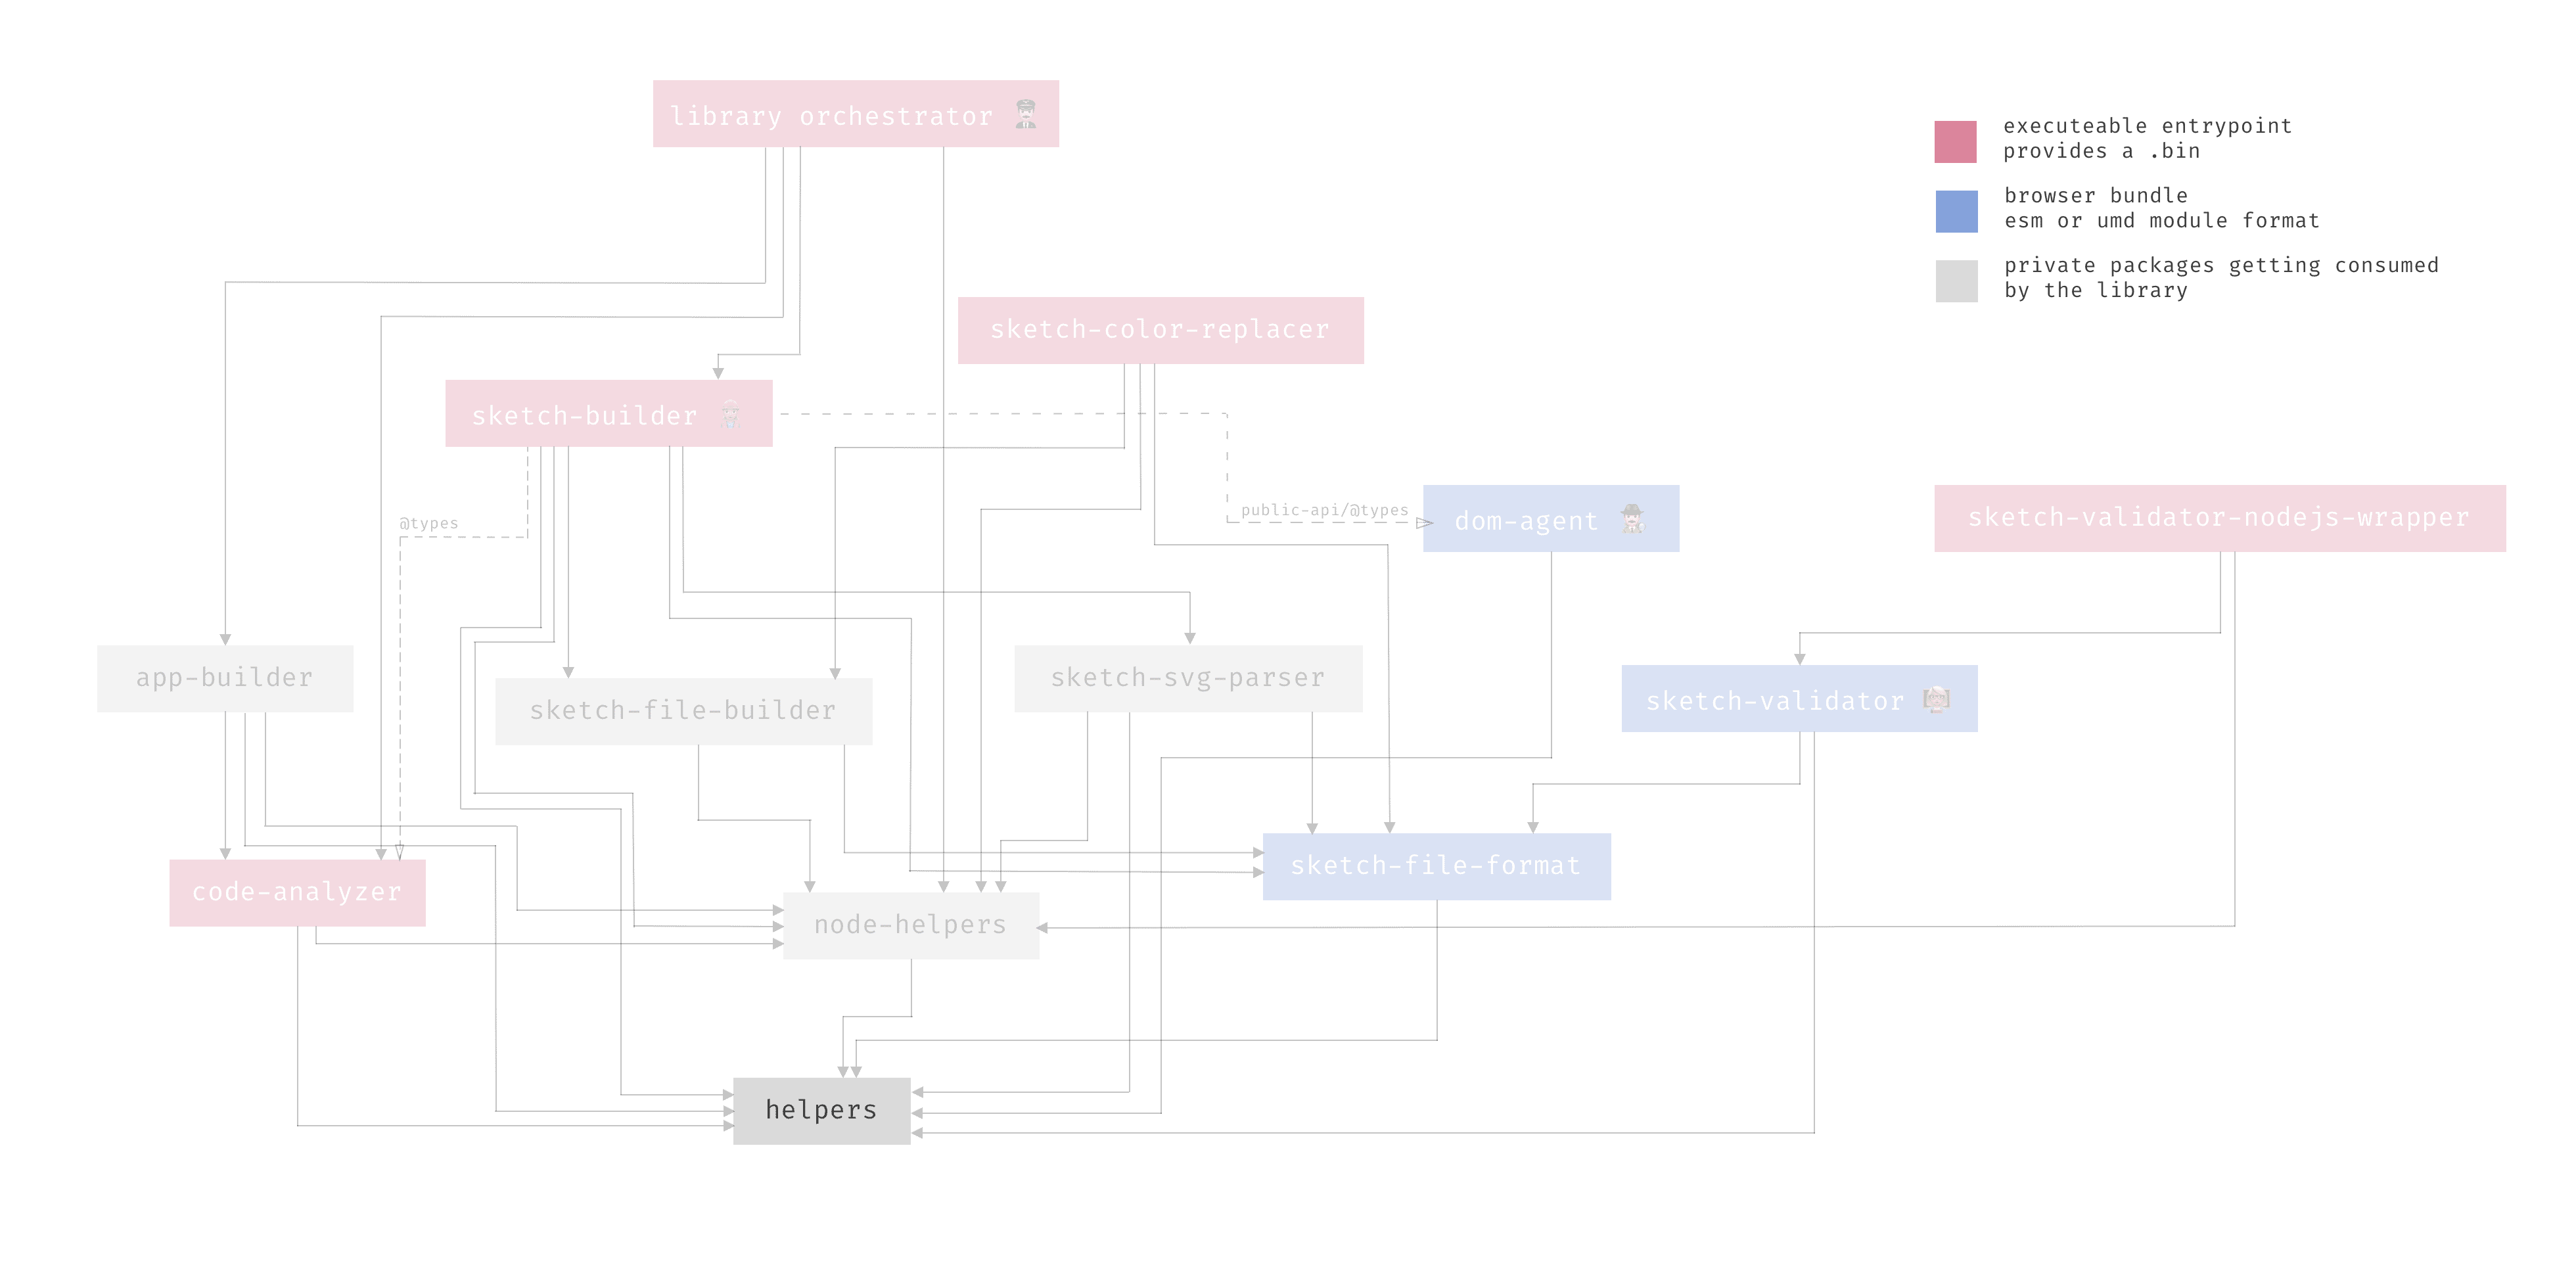 Dependency graph of the sketchmine helpers